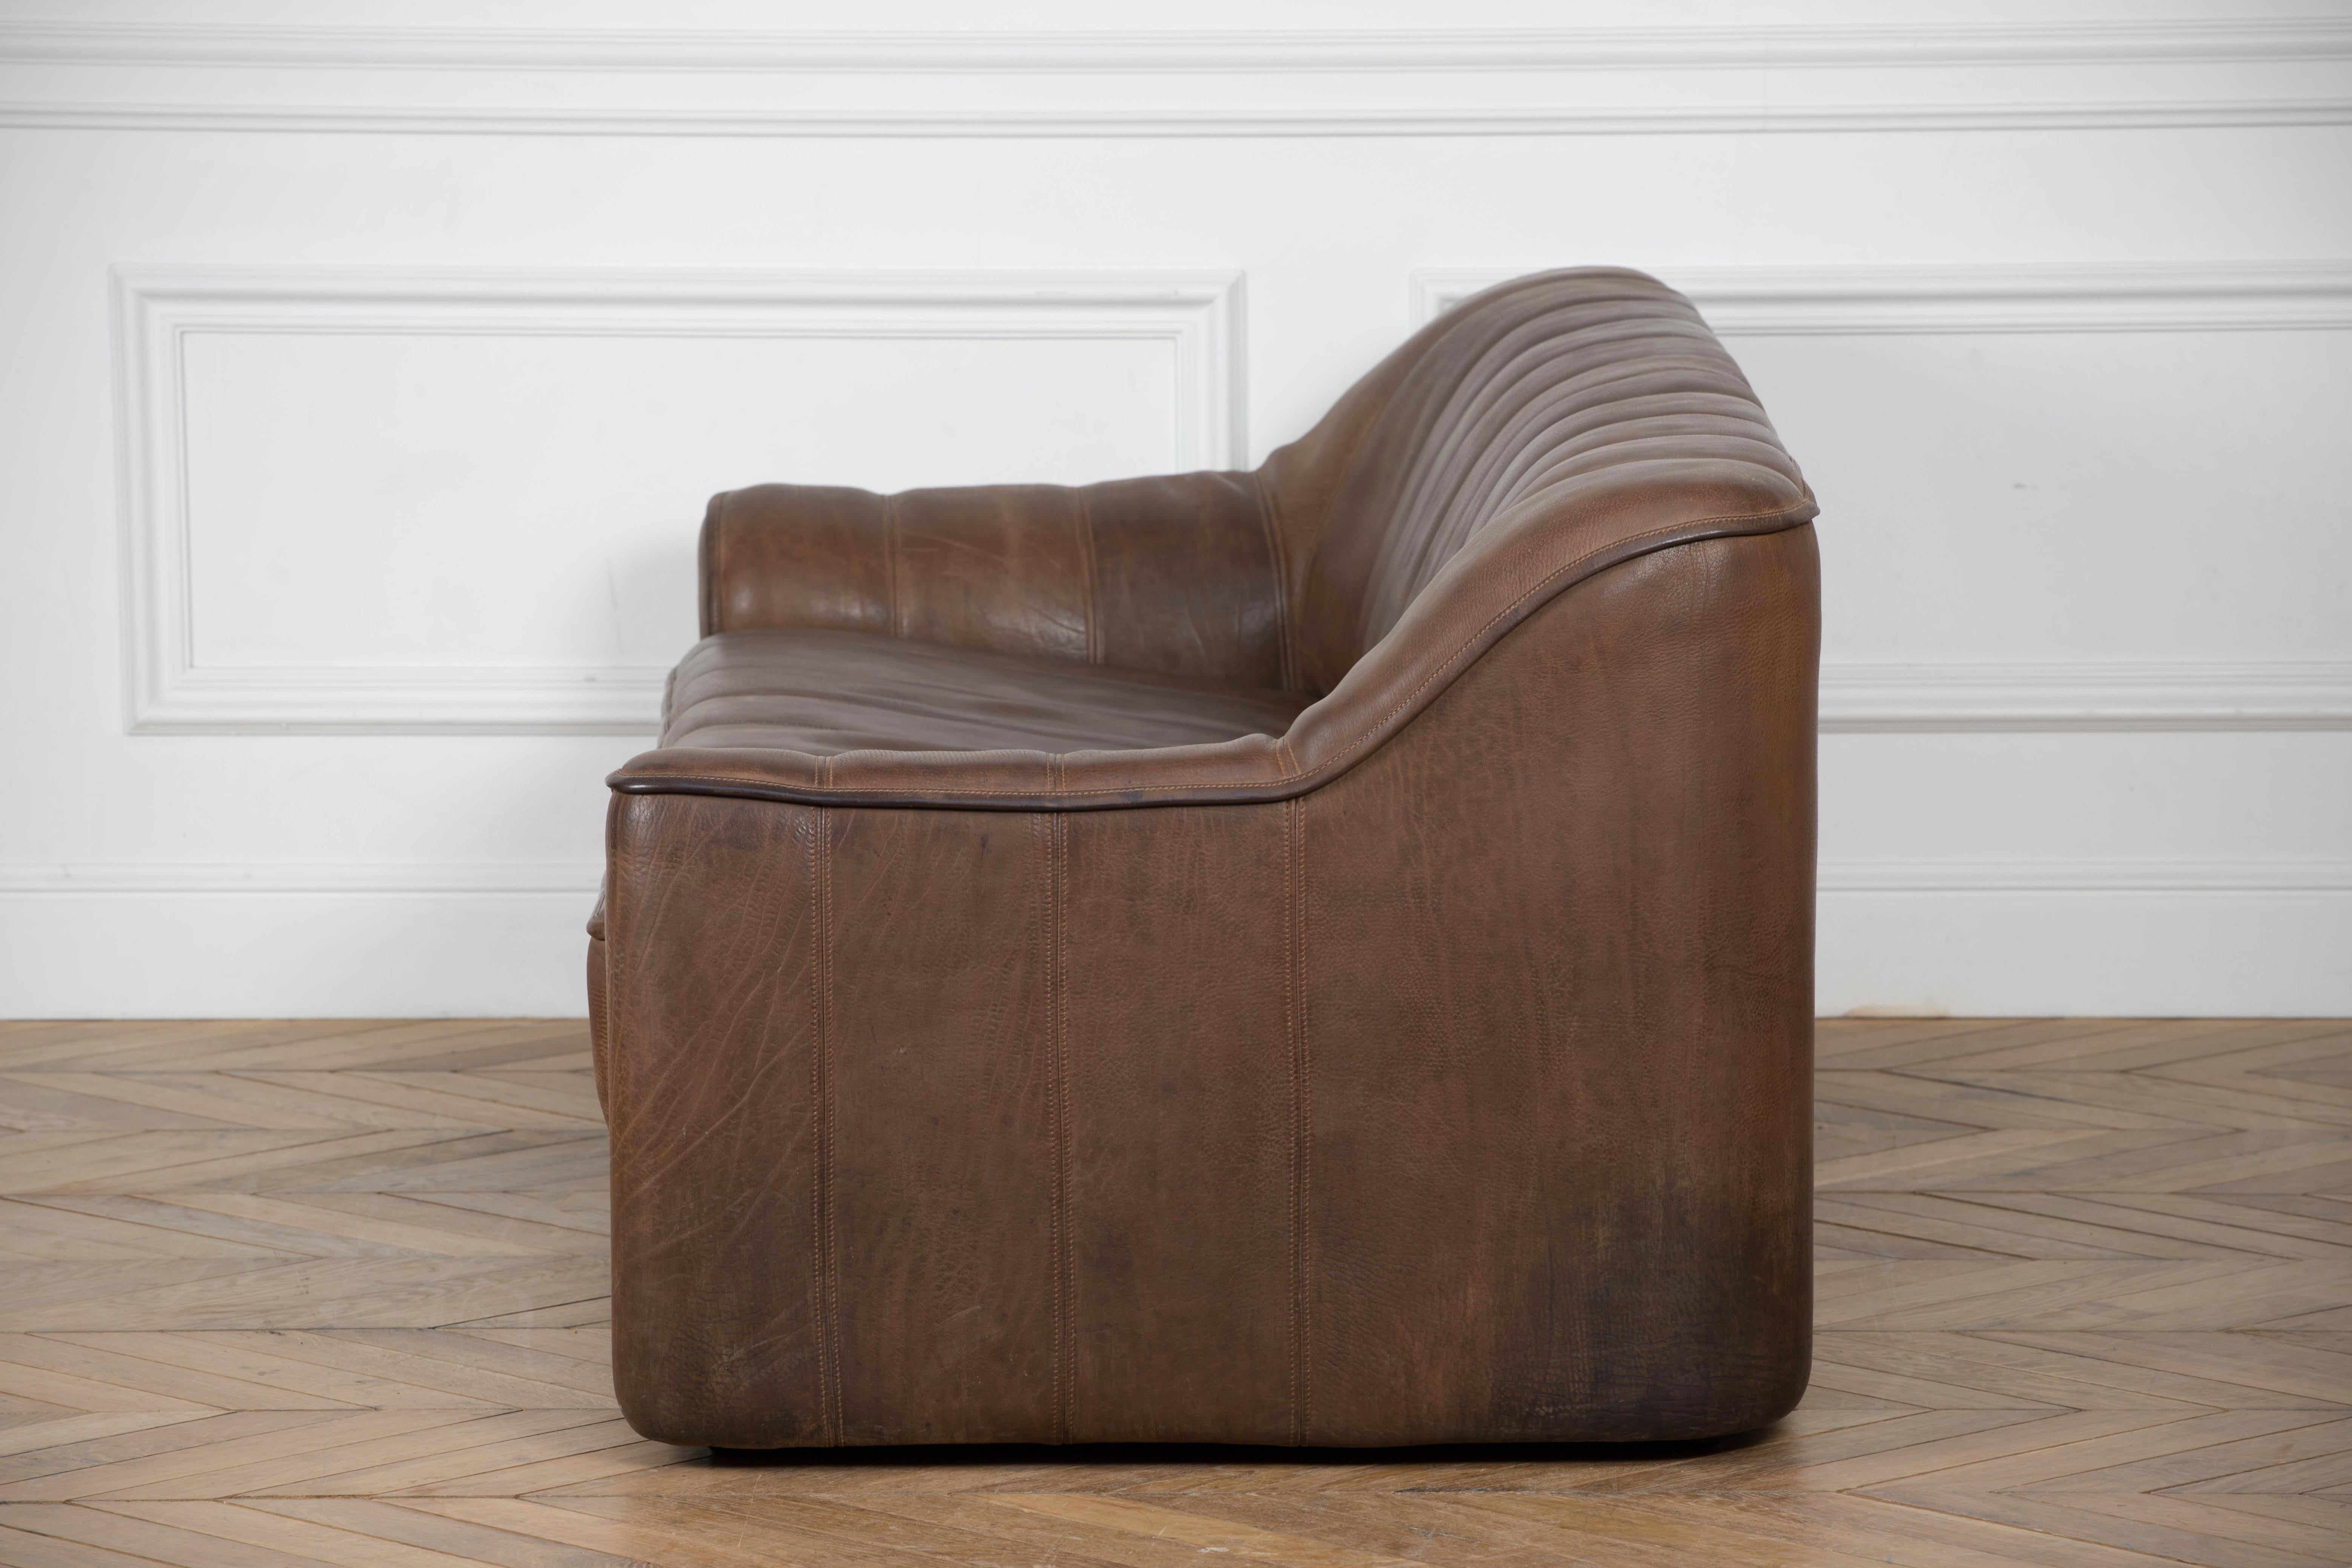 1970er Jahre Vintage De Sede DS 44 Dreisitzer-Sofa aus braunem, dunklem Cognacfarbenem Buffalo-Leder (Ende des 20. Jahrhunderts)